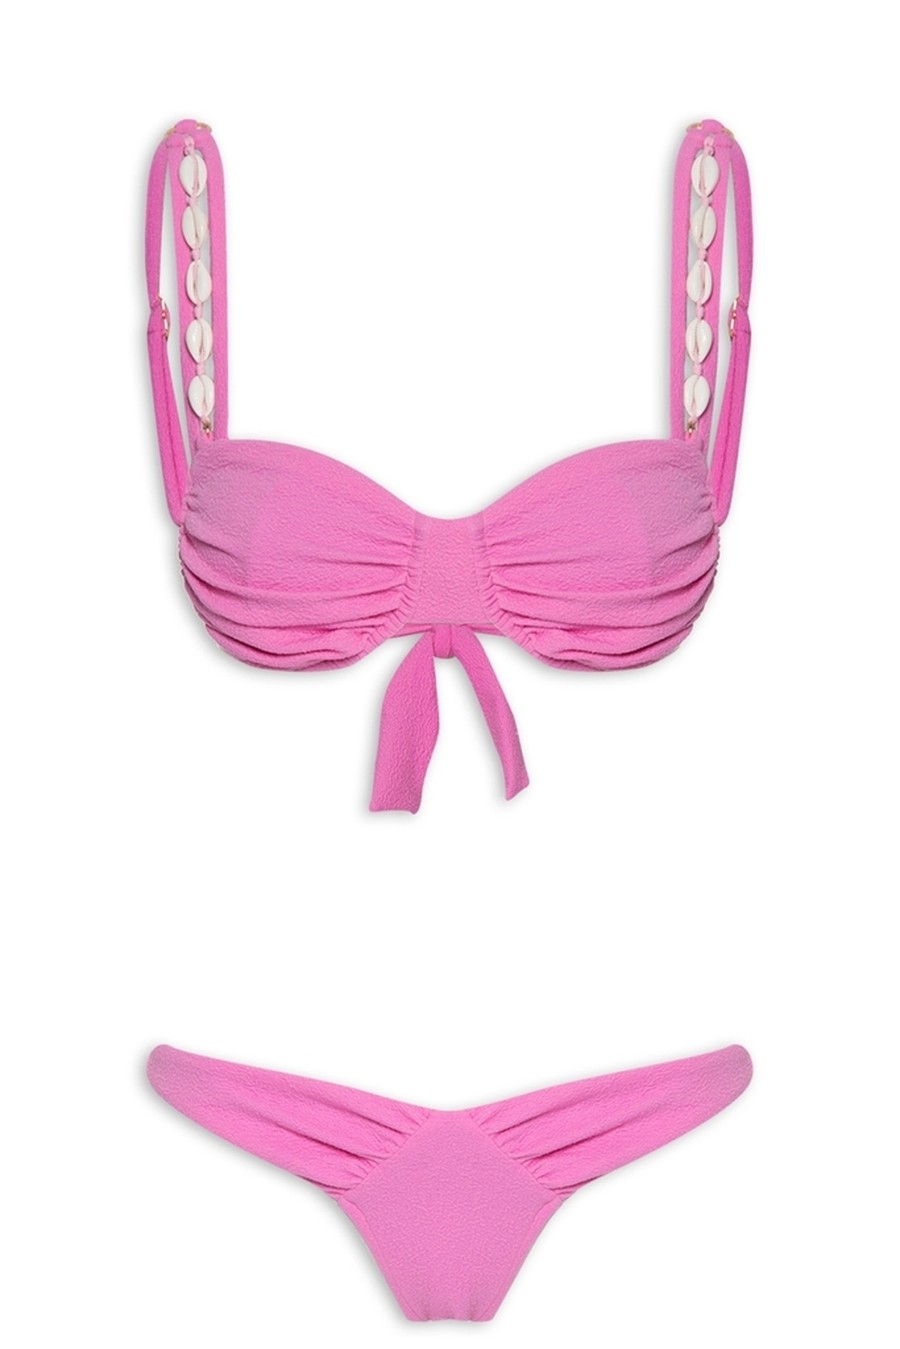 tanga alexa pink chiclete 0165 hype beachwear